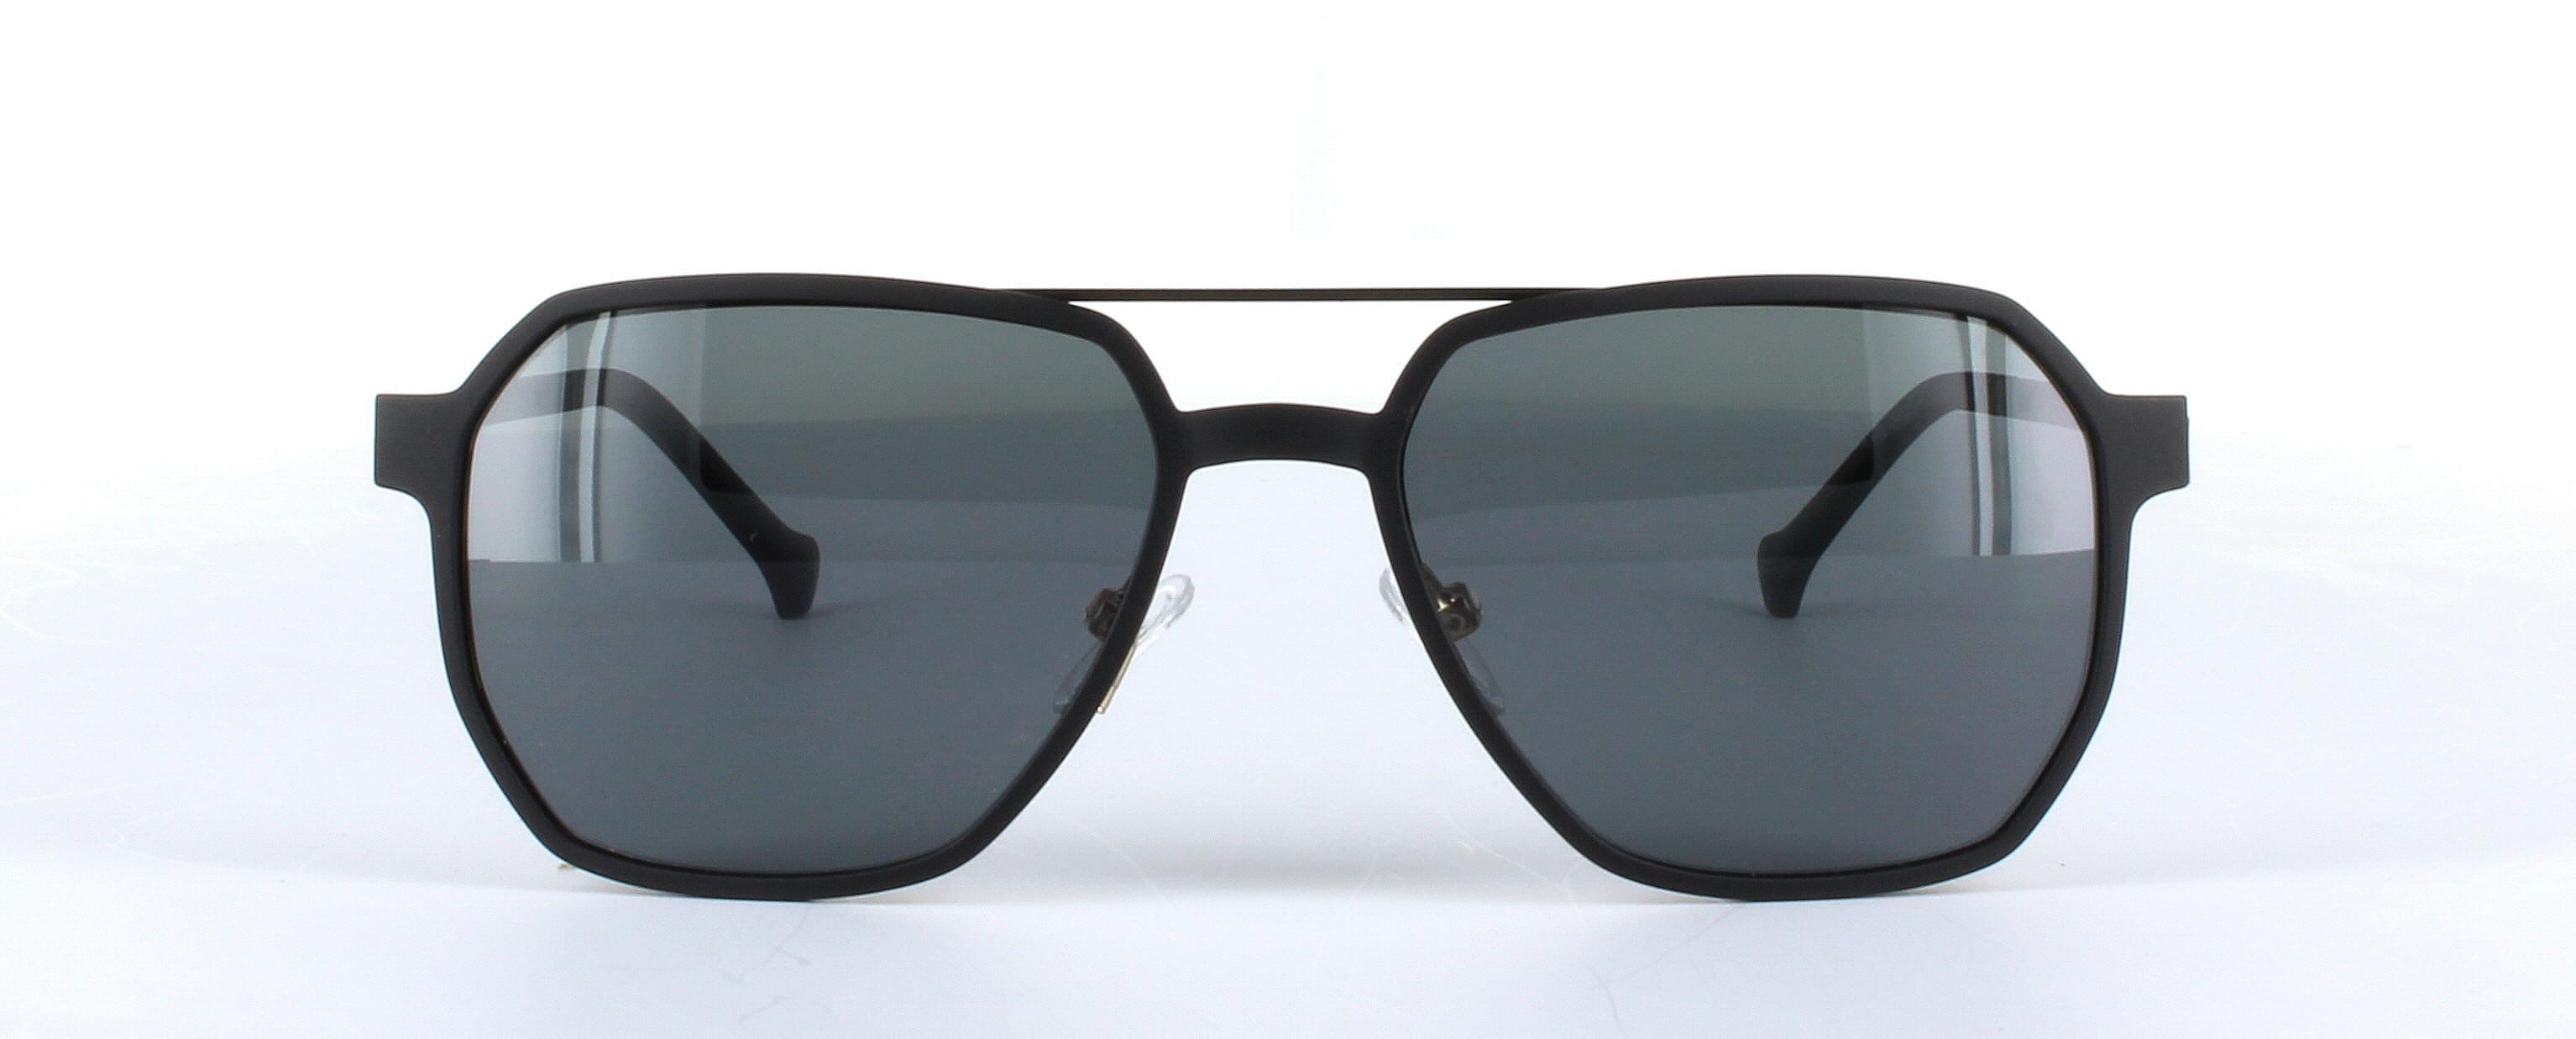 Eyecroxx 617 Black Full Rim Aviator Metal Glasses - Image View 5